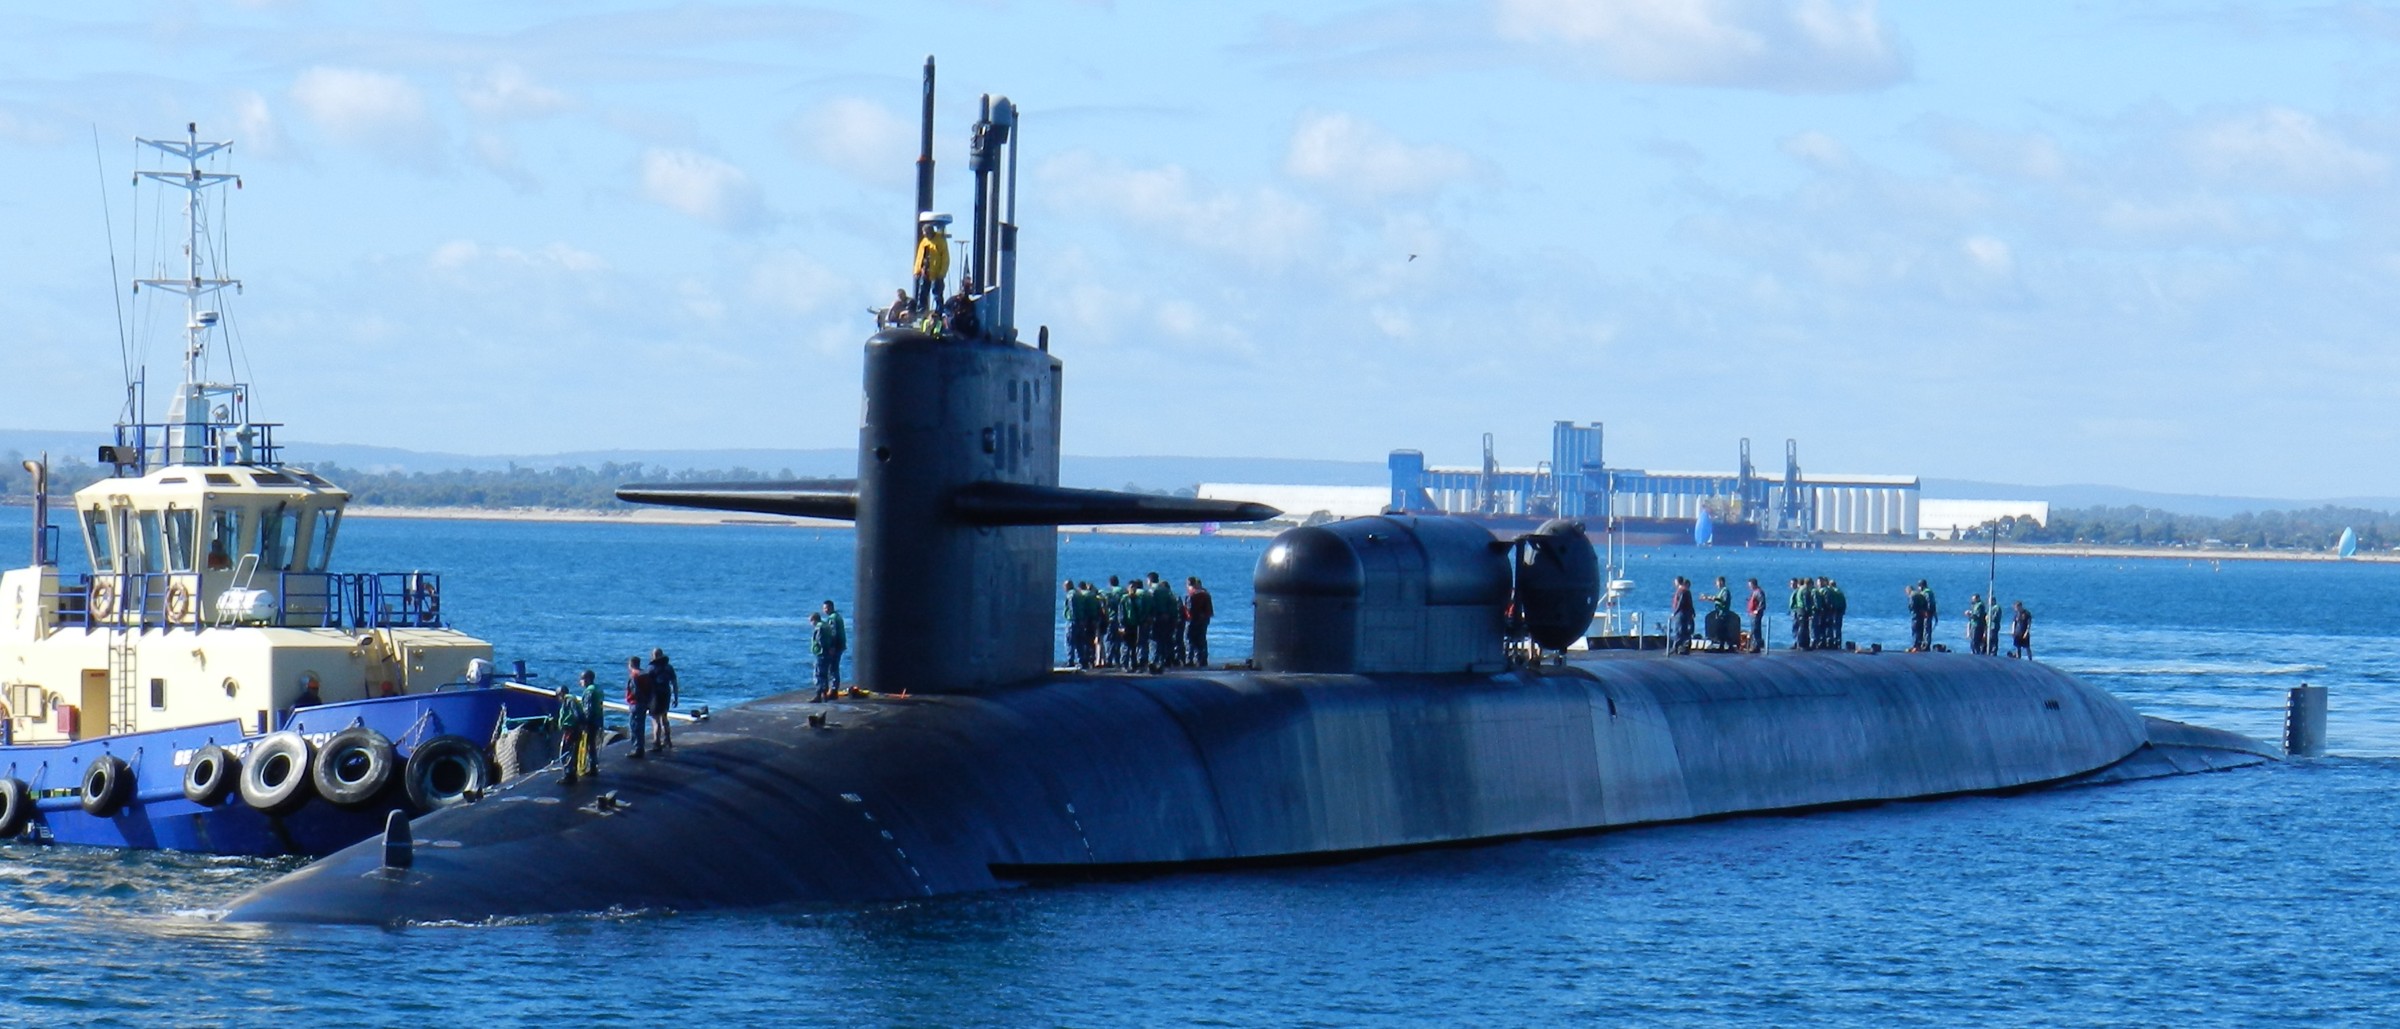 ssgn-727 uss michigan guided missile submarine 2012 19 hmas stirling australia